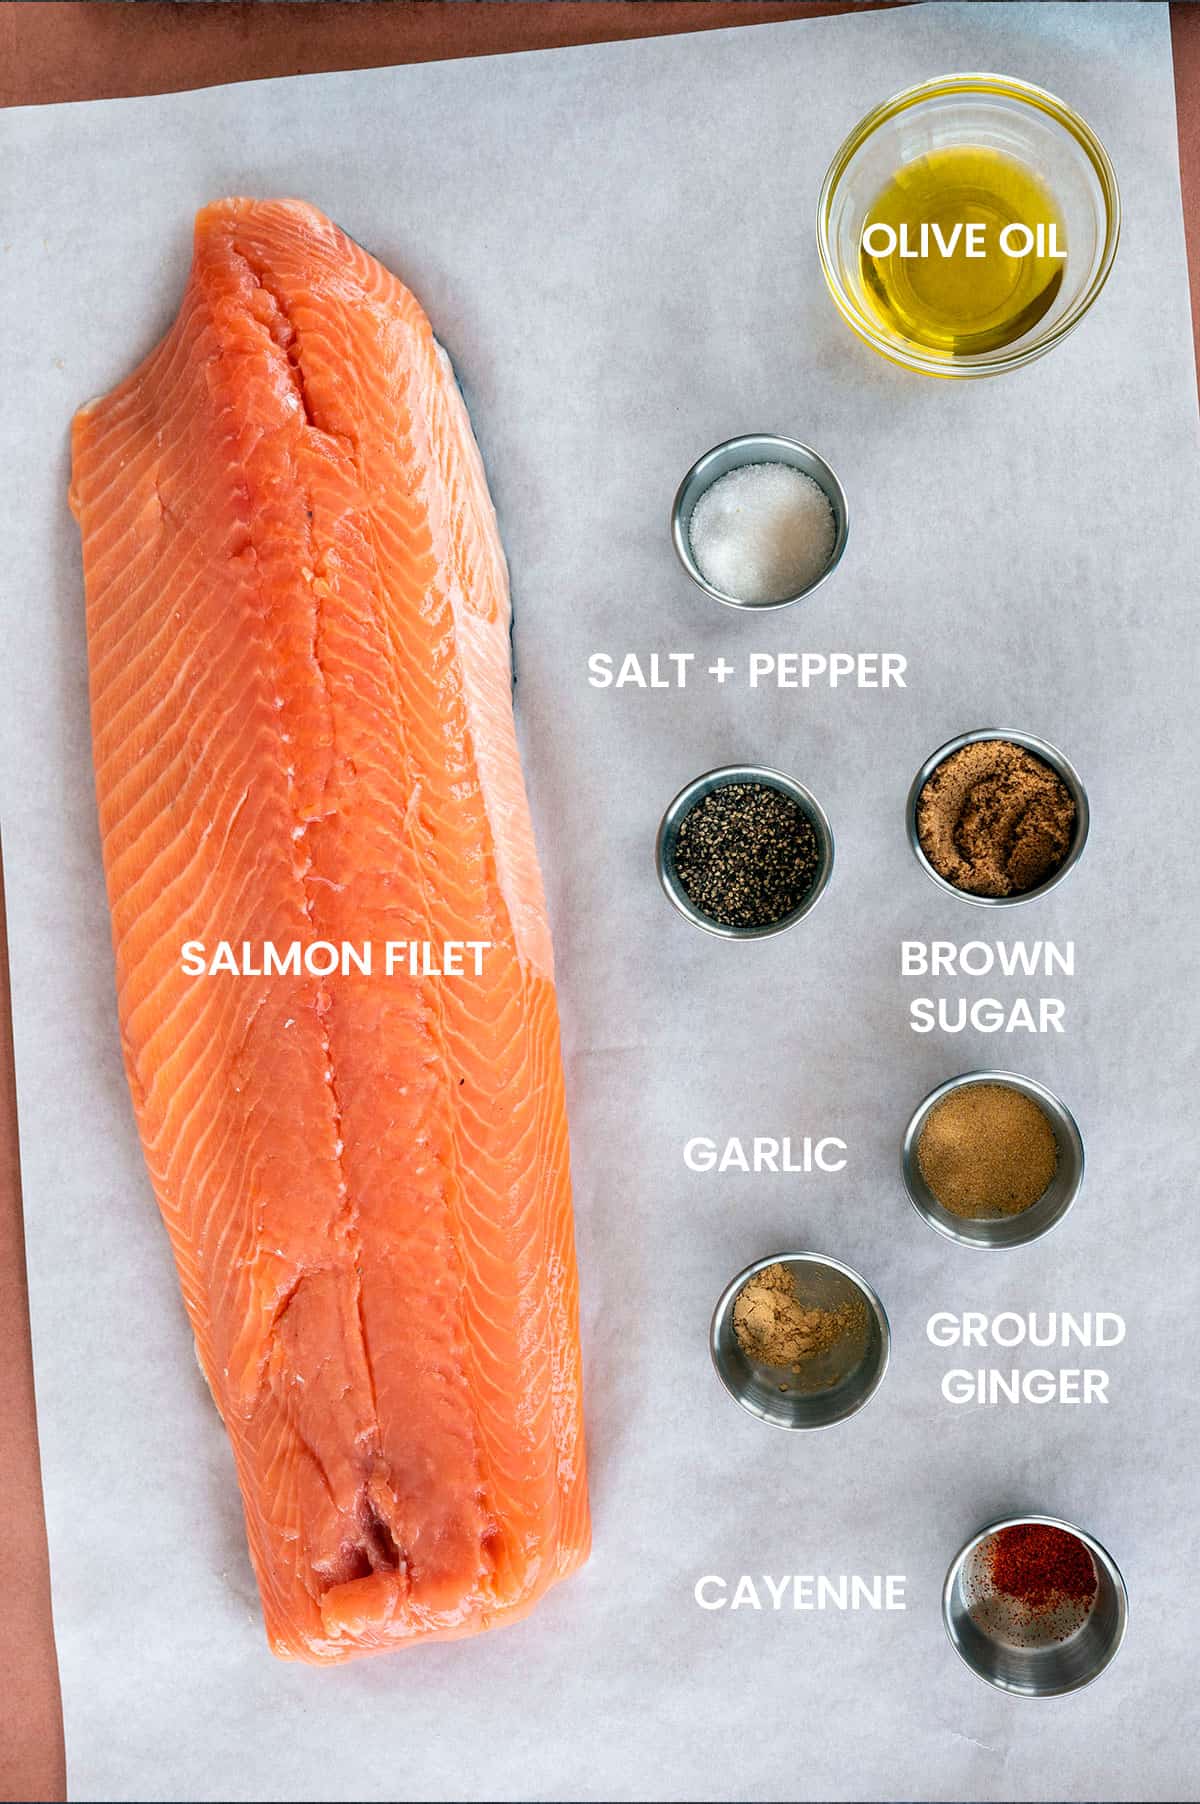 salmon ingredients: salmon filet, olive oil, salt, pepper, brown sugar, garlic, ginger and cayenne.